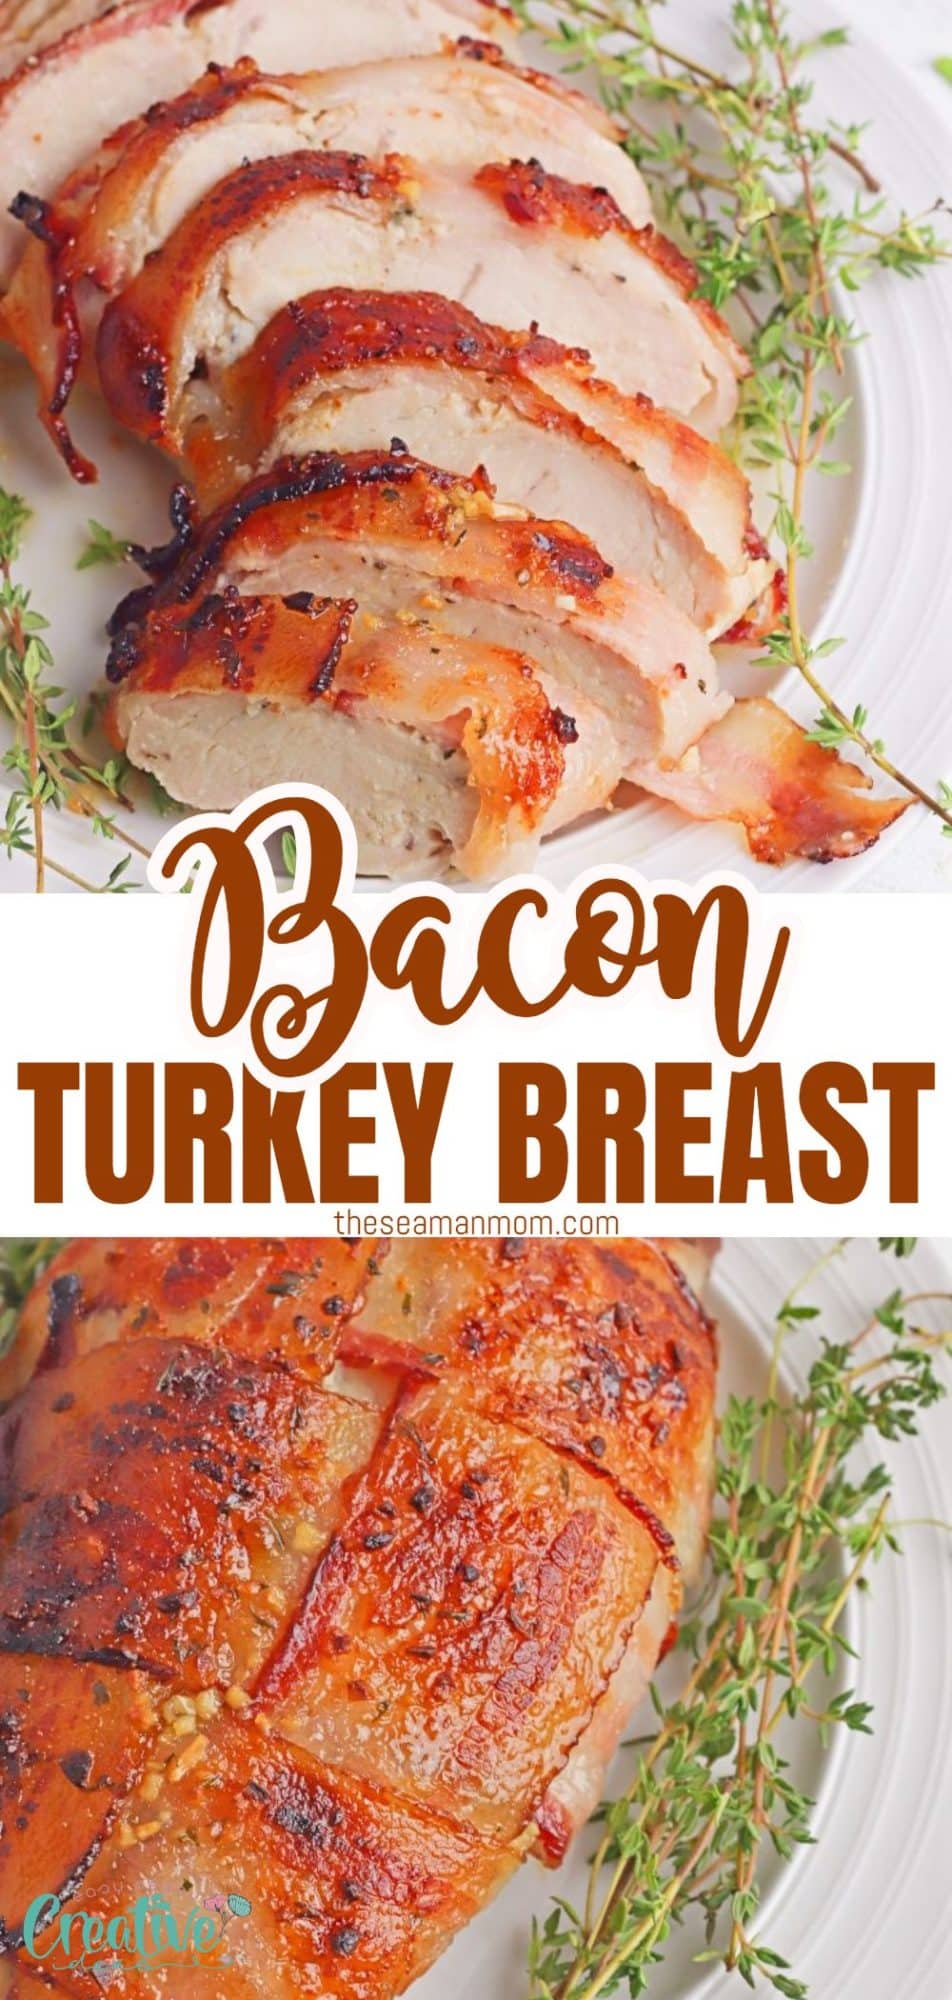 Bacon wrapped turkey breast recipe